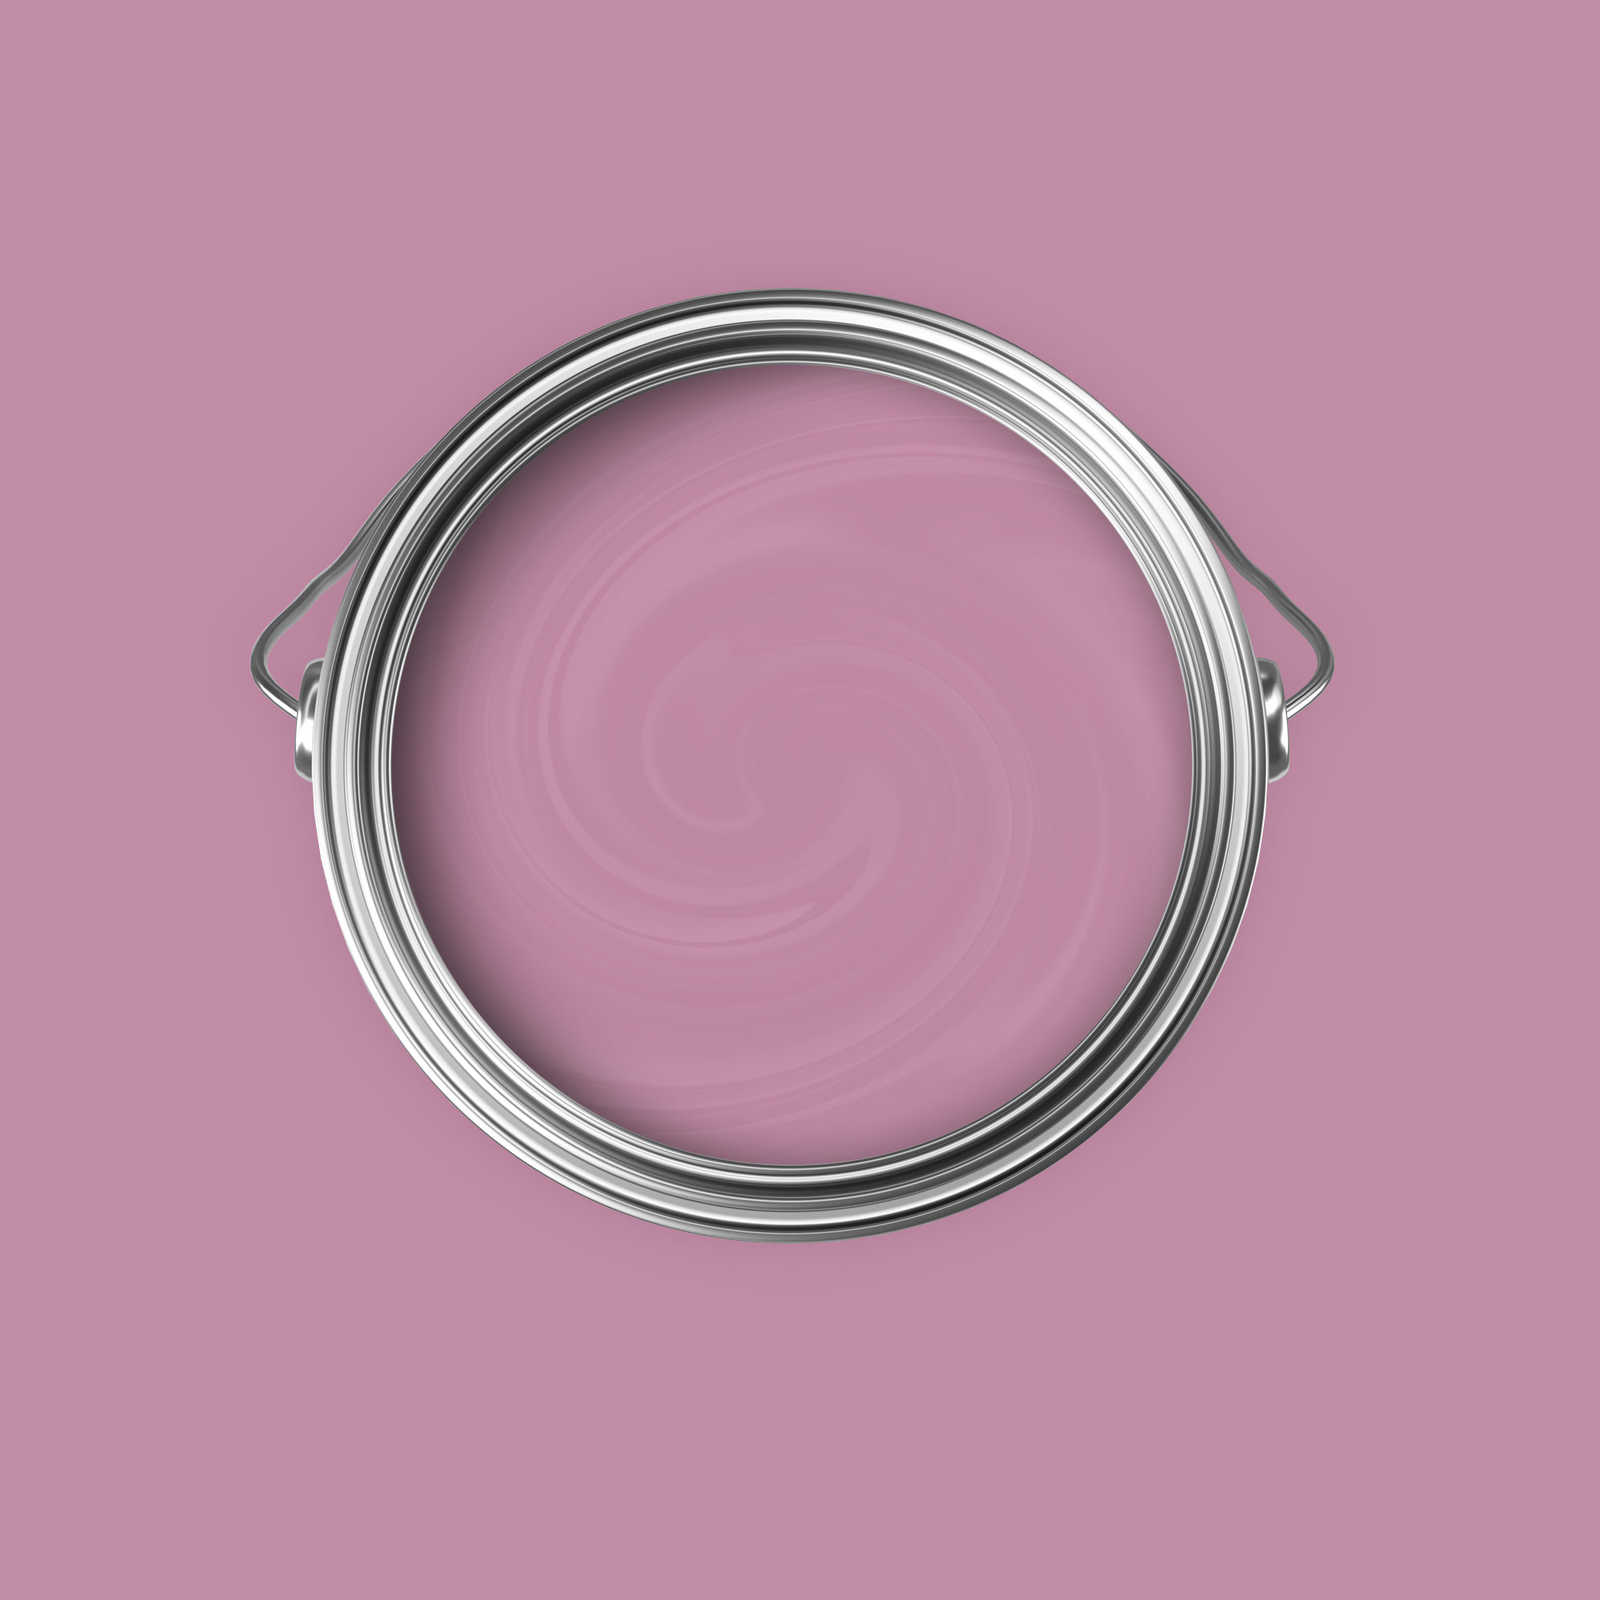             Premium Wandfarbe einfühlsame Beere »Beautiful Berry« NW210 – 5 Liter
        